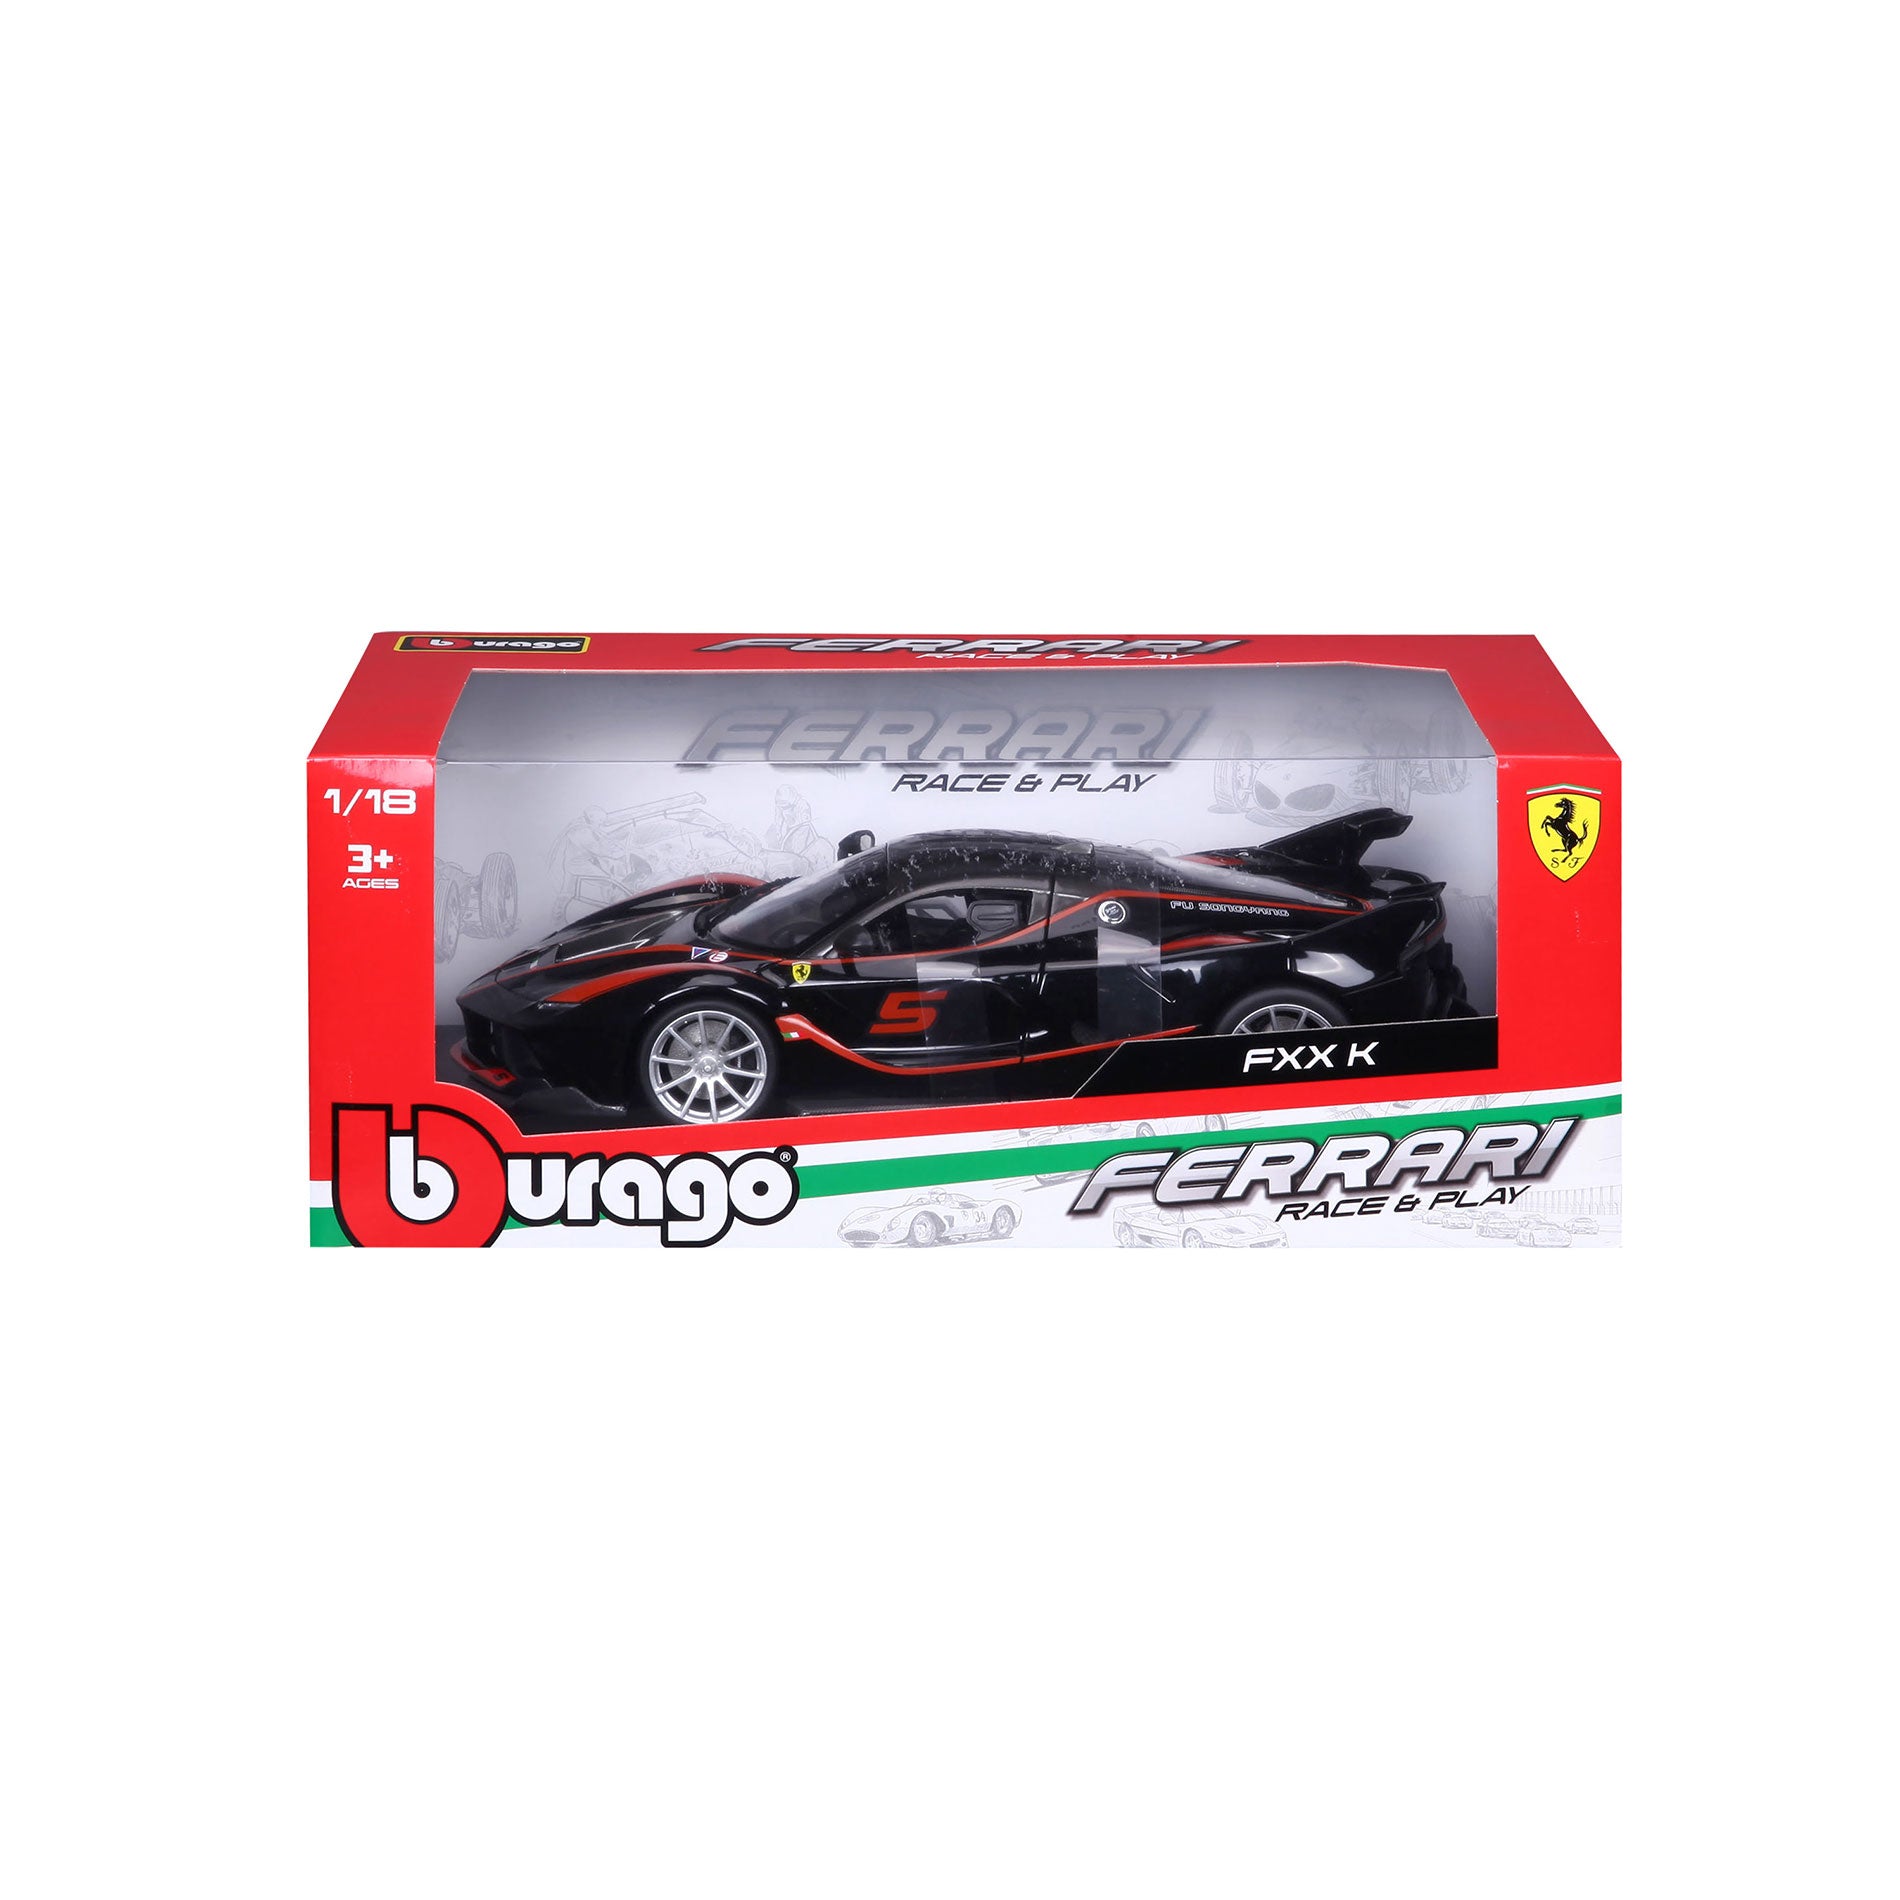 18-16010 (#5) - Bburago - 1:18 - Ferrari  R&P - Ferrari  Nera e ro